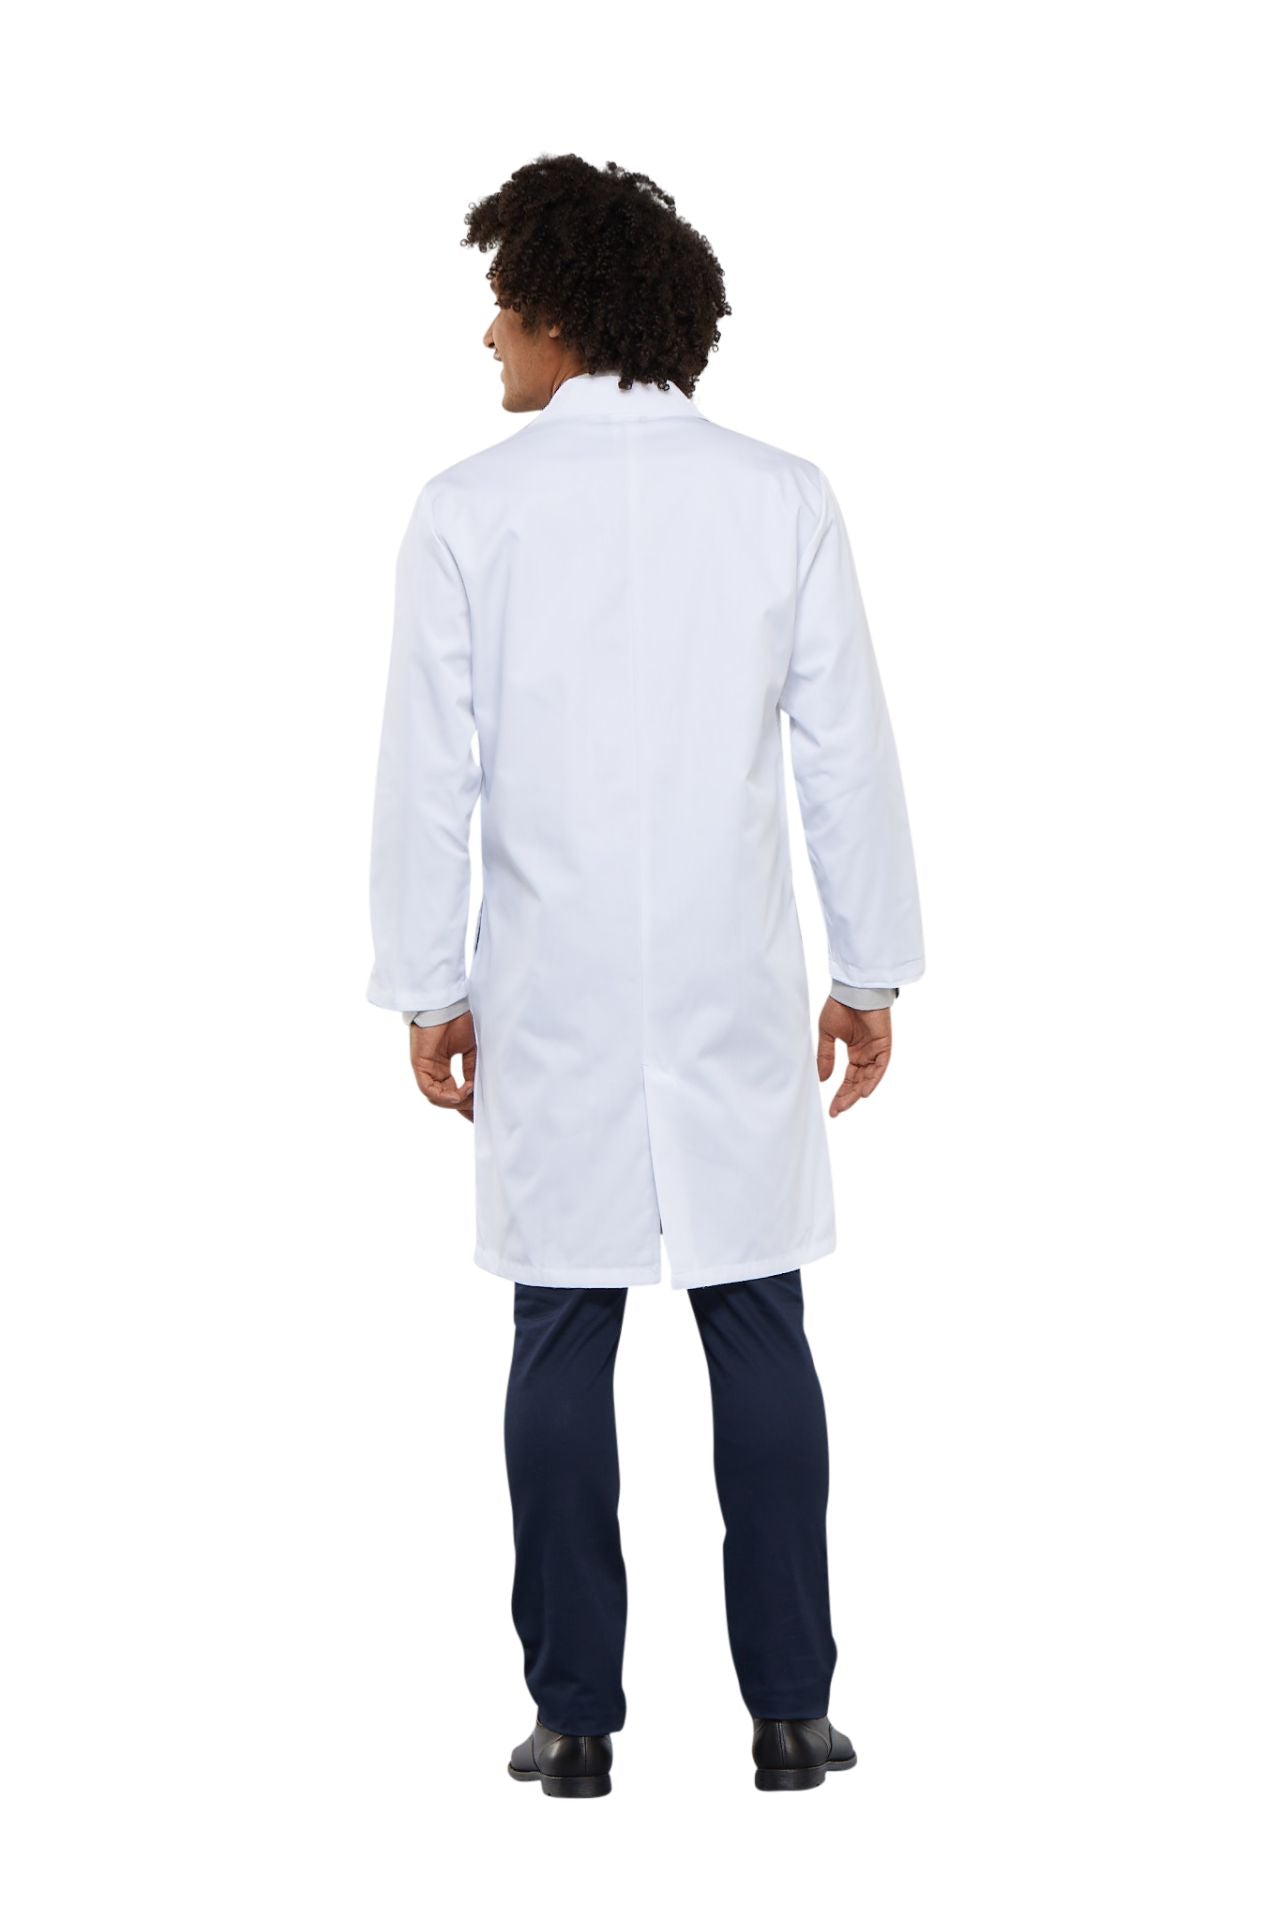 White - Cherokee Lab Coats 40" Unisex Lab Coat